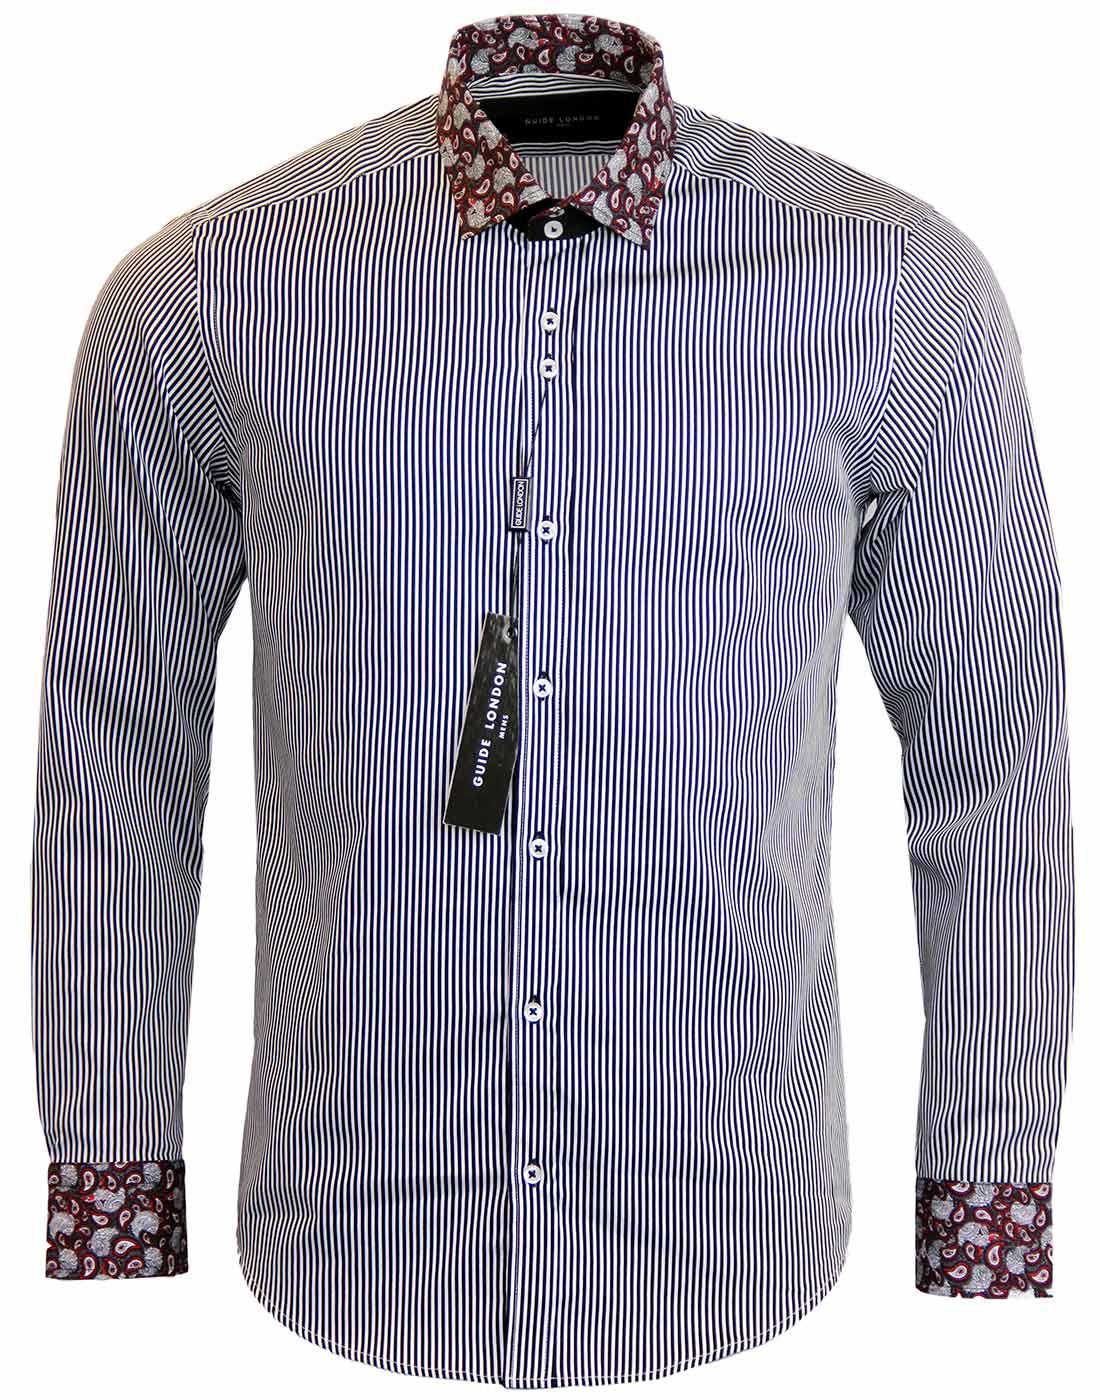 GUIDE LONDON 1960s Mod Paisley Collar Stripe Shirt